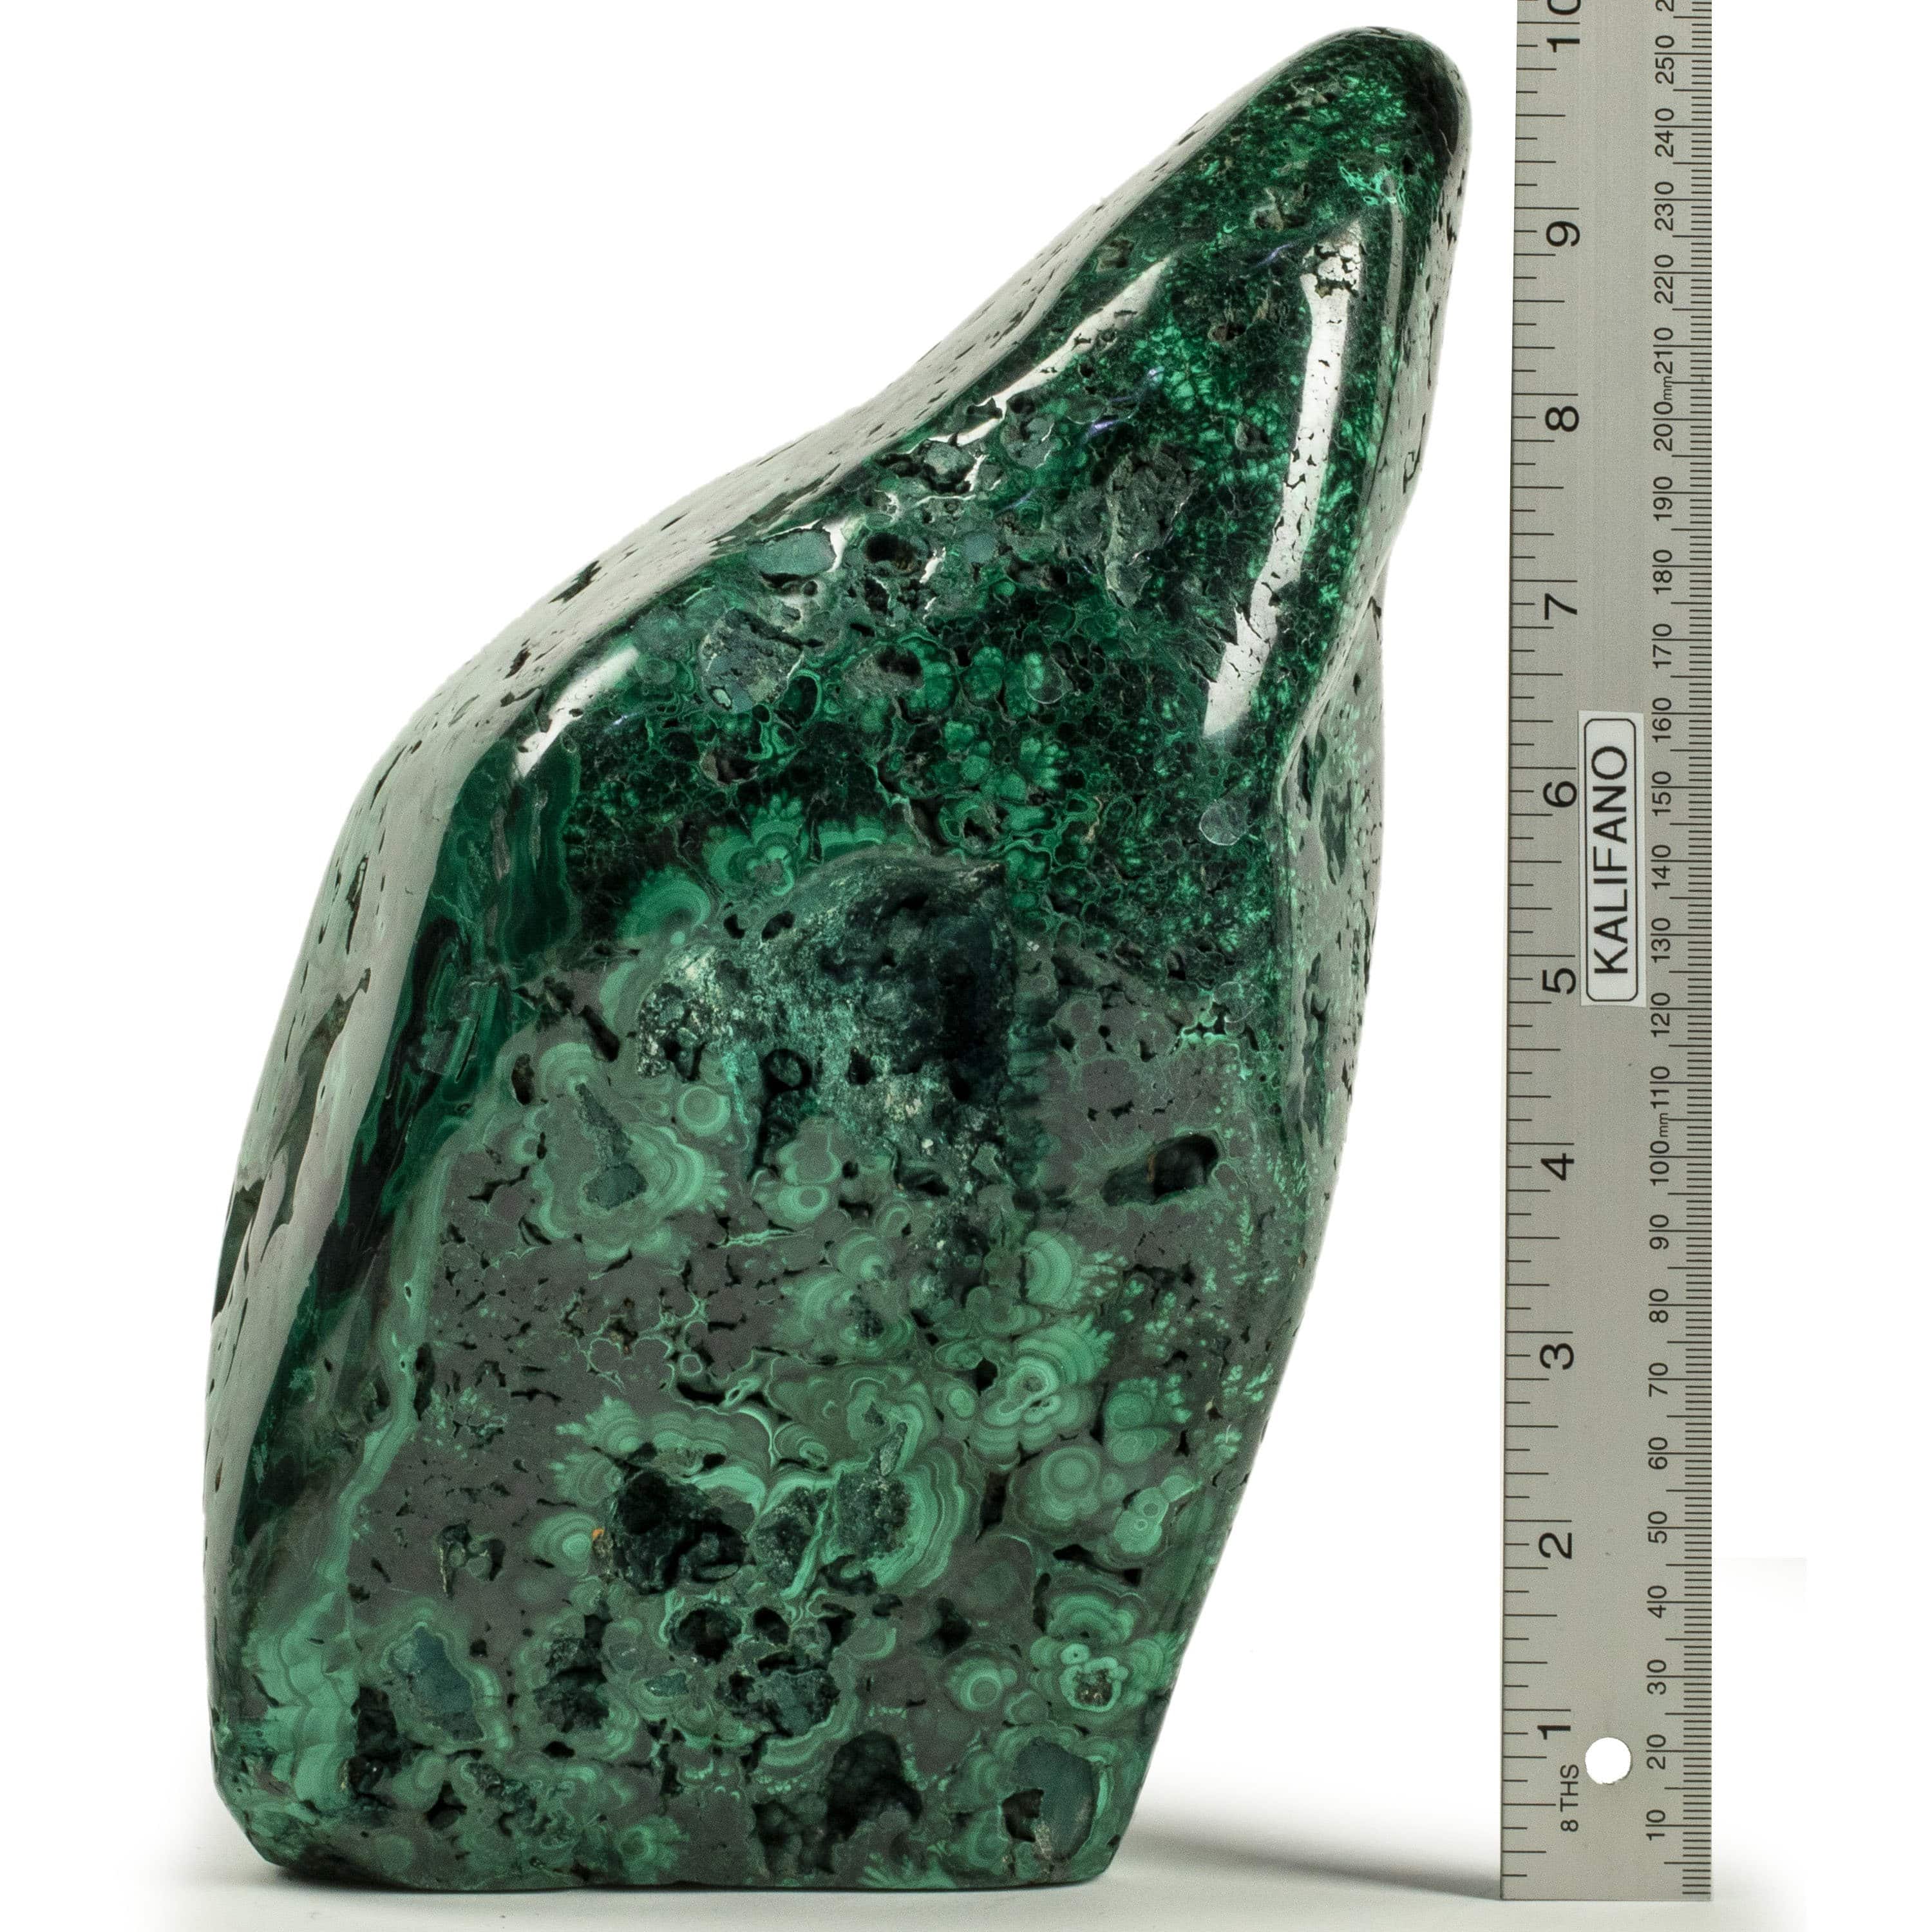 Kalifano Malachite Rare Natural Green Malachite Polished Freeform Specimen from Congo - 14.3 kg / 31.4 lbs MA9800.003